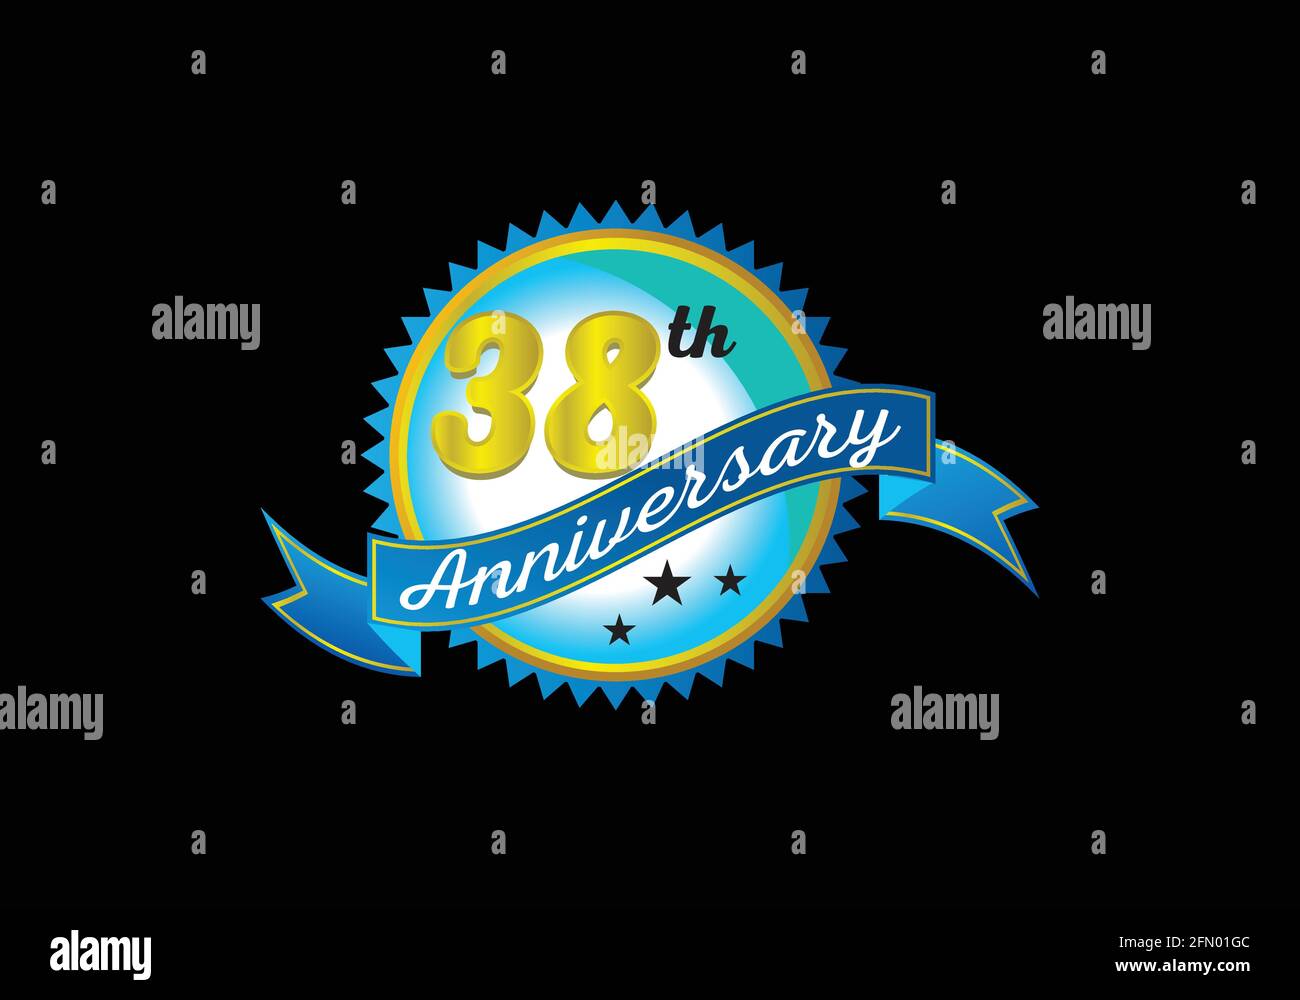 38th anniversary logo design vector template Stock Vector